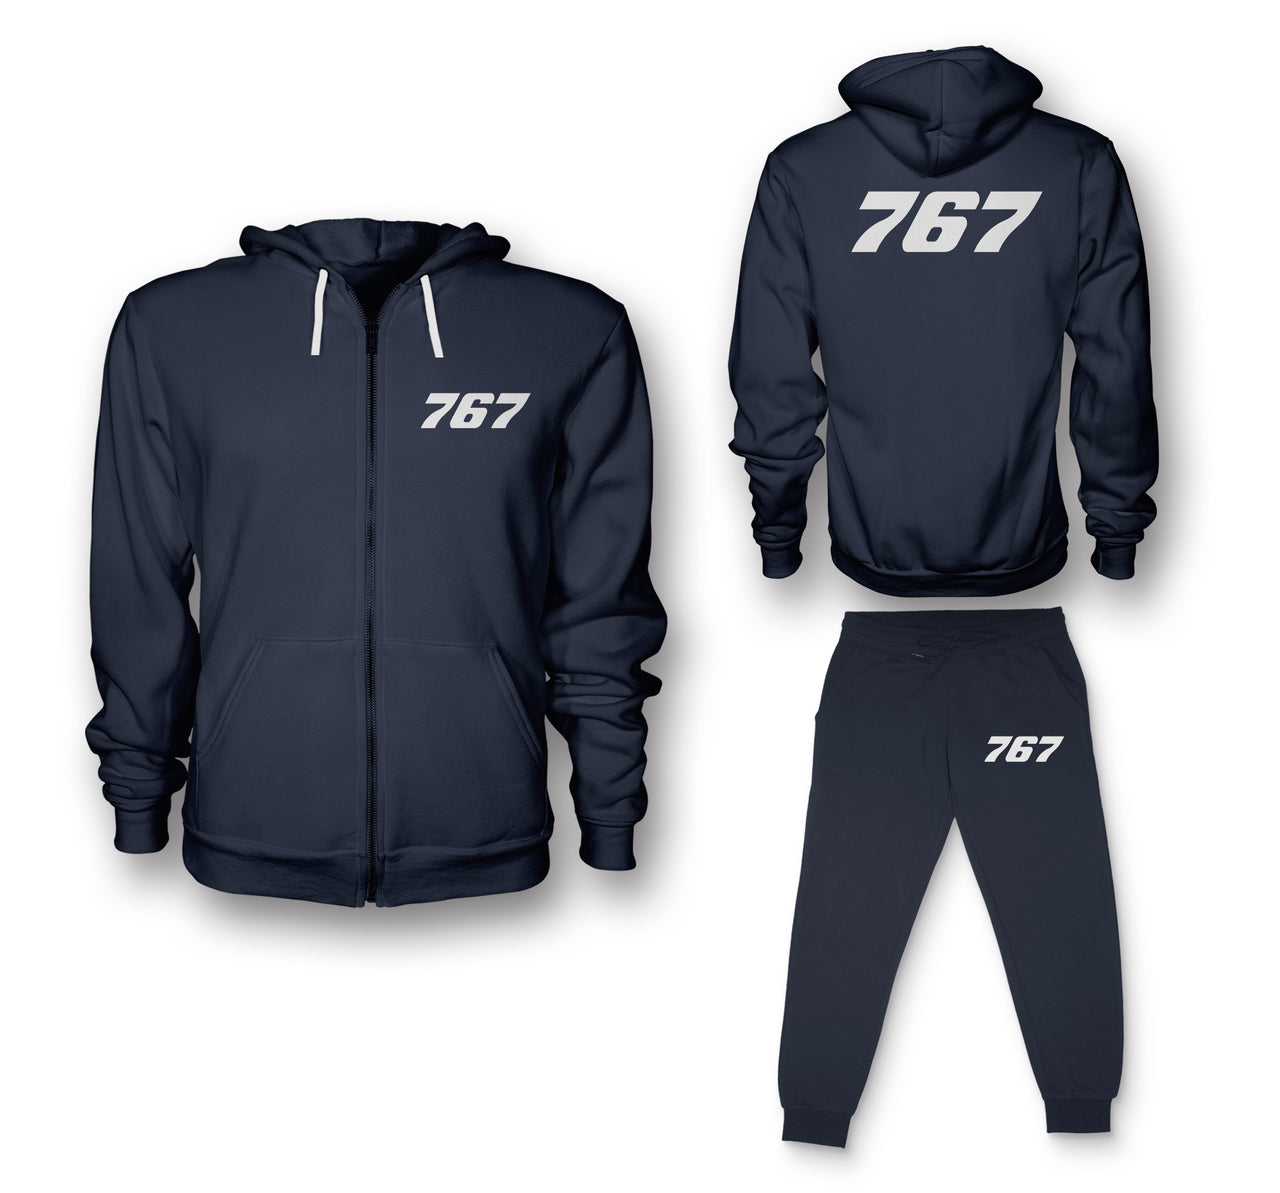 767 Flat Text Designed Zipped Hoodies & Sweatpants Set